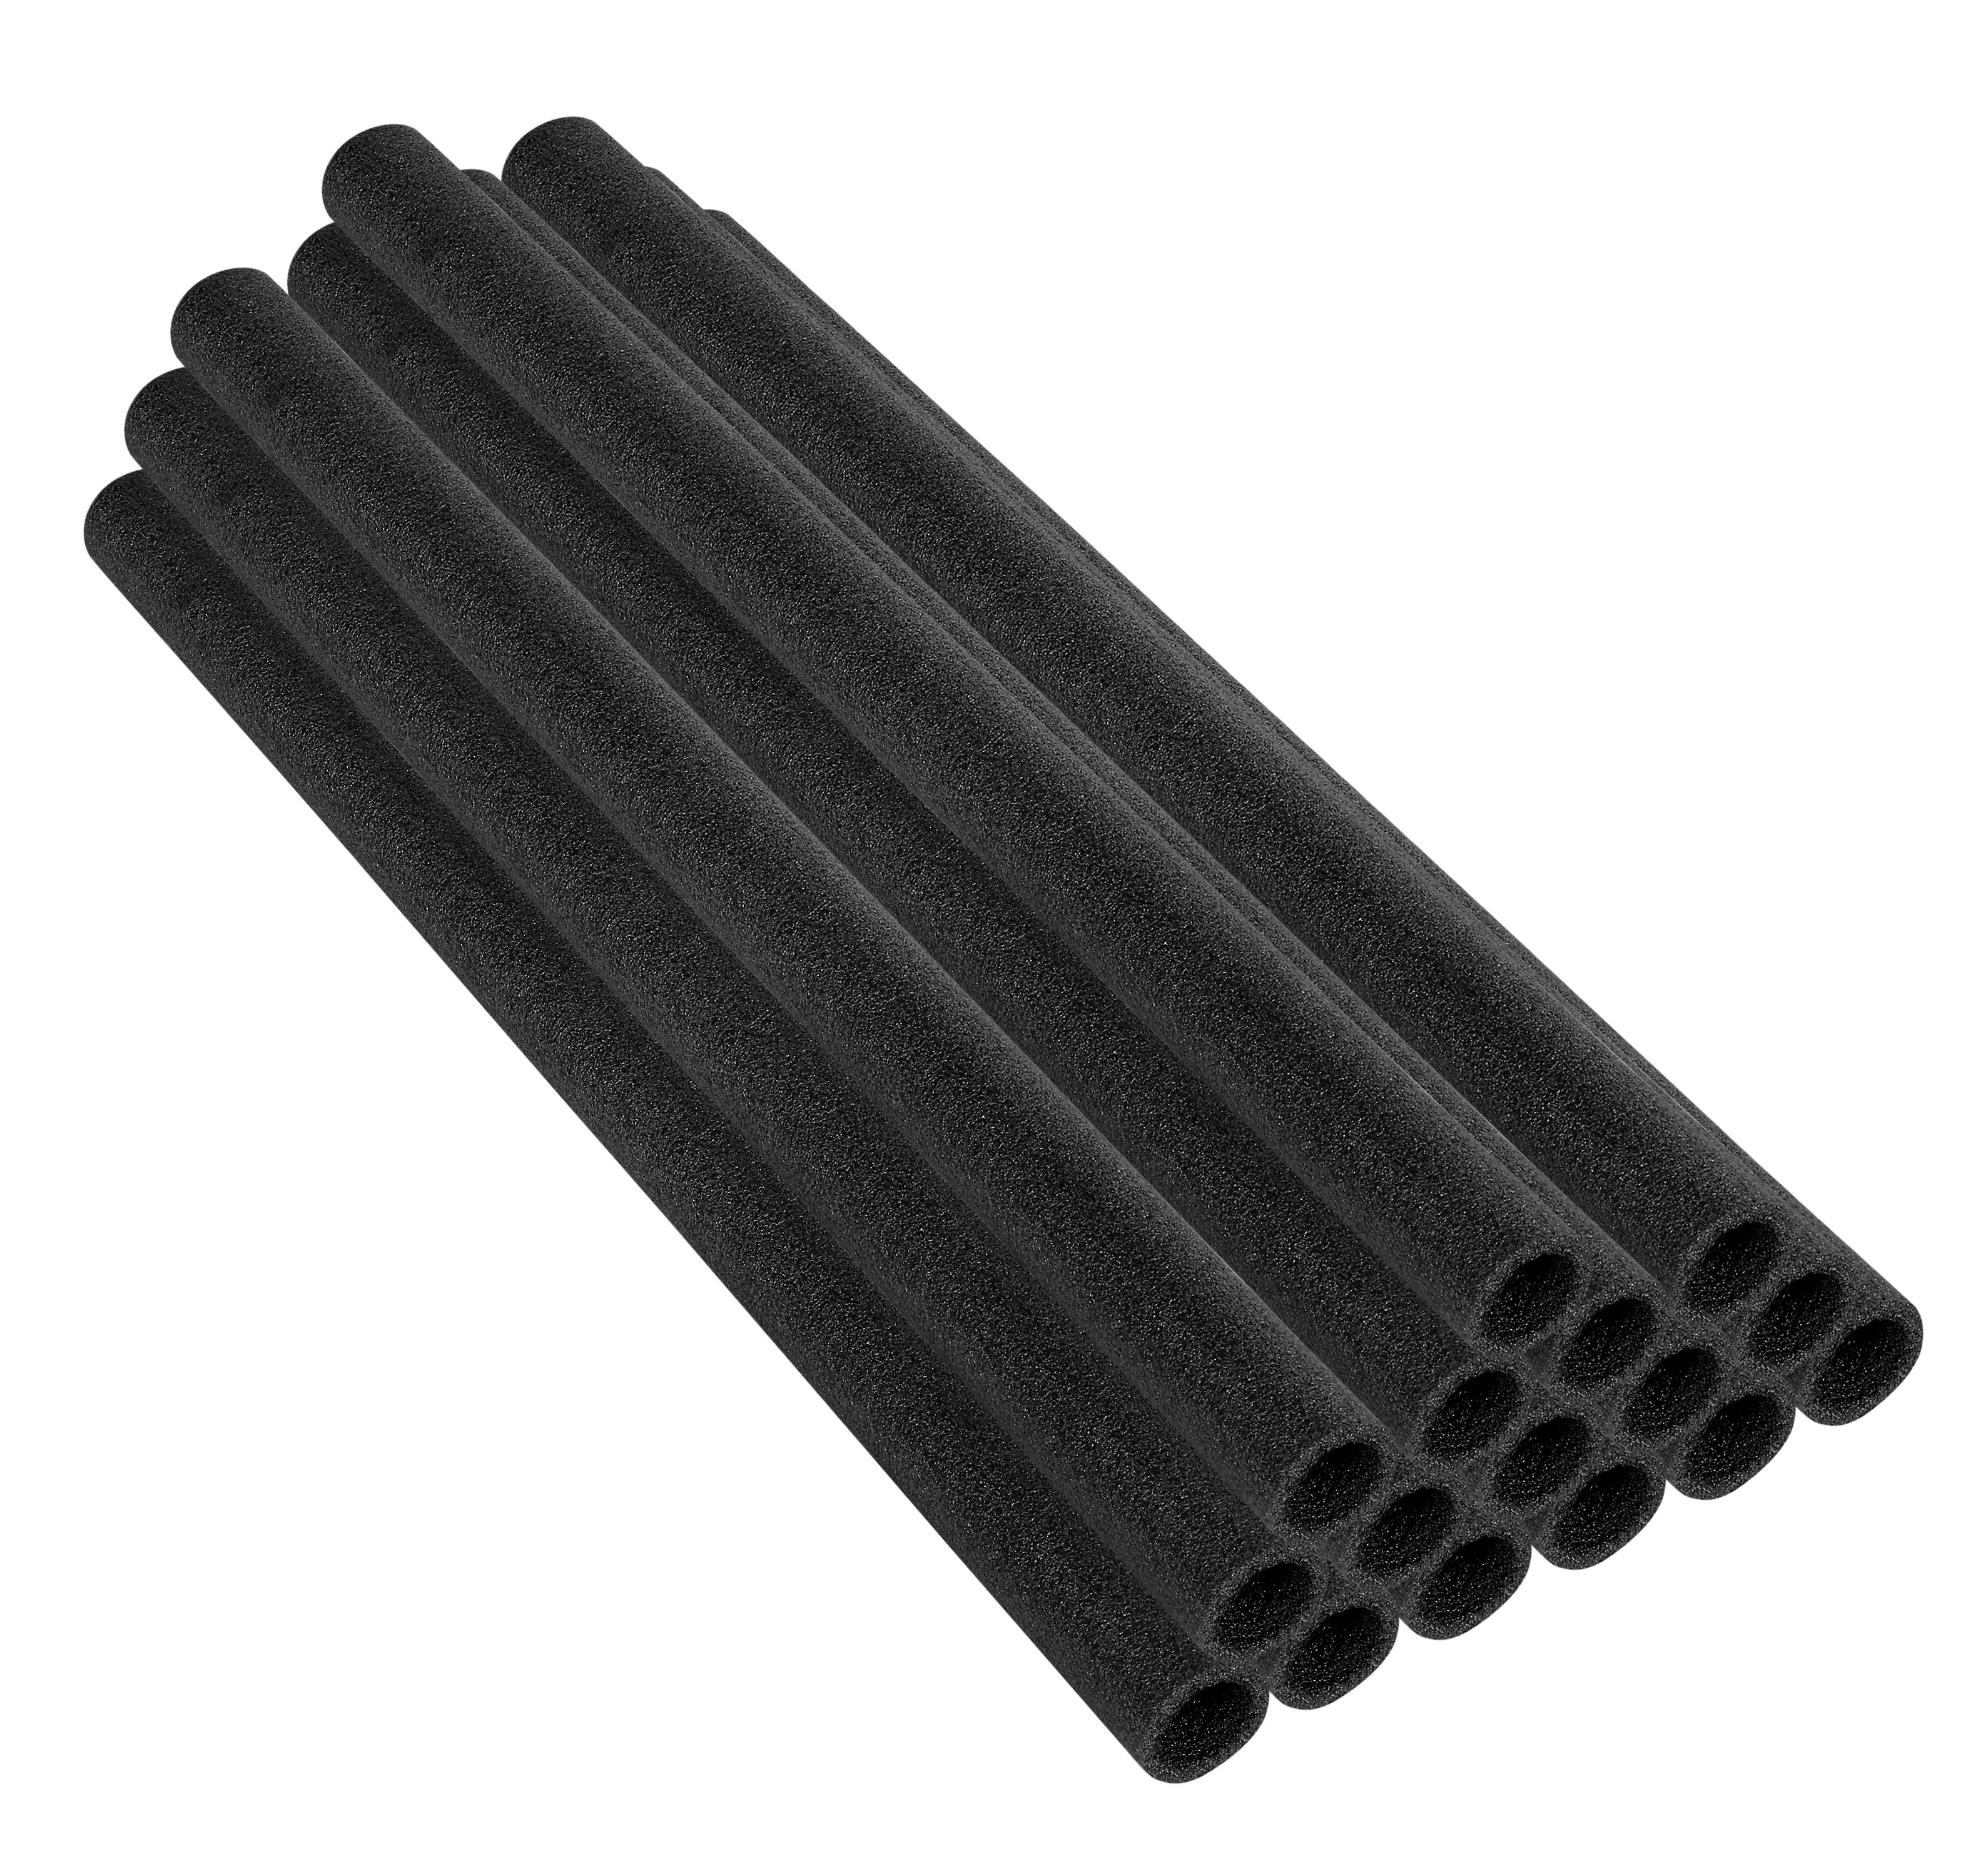 37 Inch 94cm Trampoline Foam Sleeves, 1" Diameter Pole | Replacement Sponge Padding for 8 Poles | Set of 16 - Black